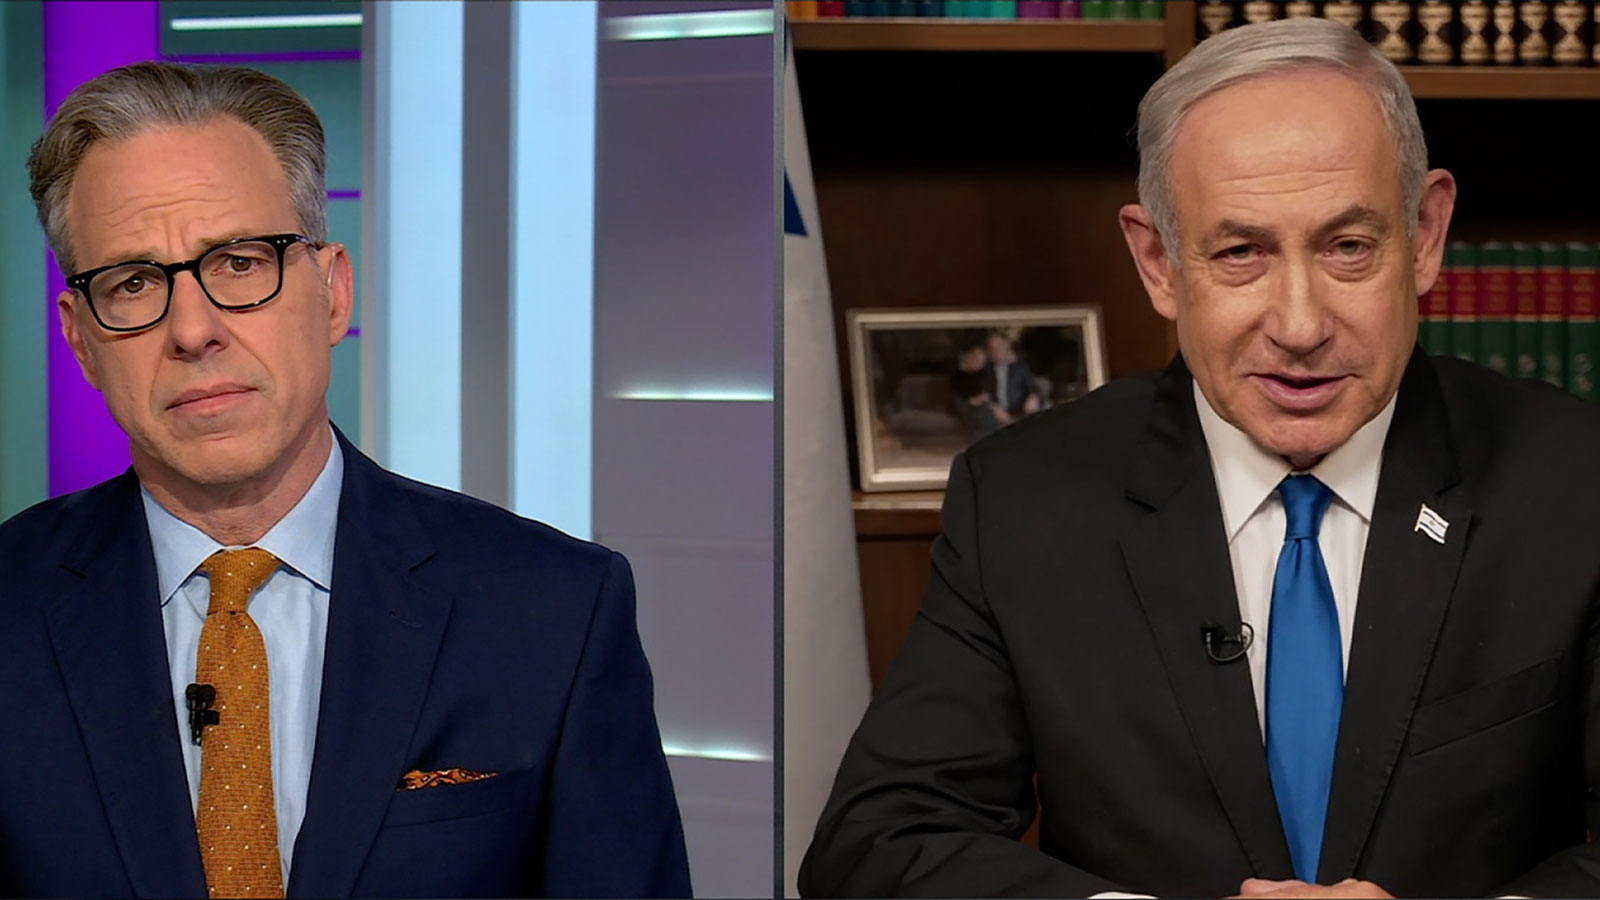 CNN's Jake Tapper interviews Israel's Prime Minister Benjamin Netanyahu on Tuesday, May 21.